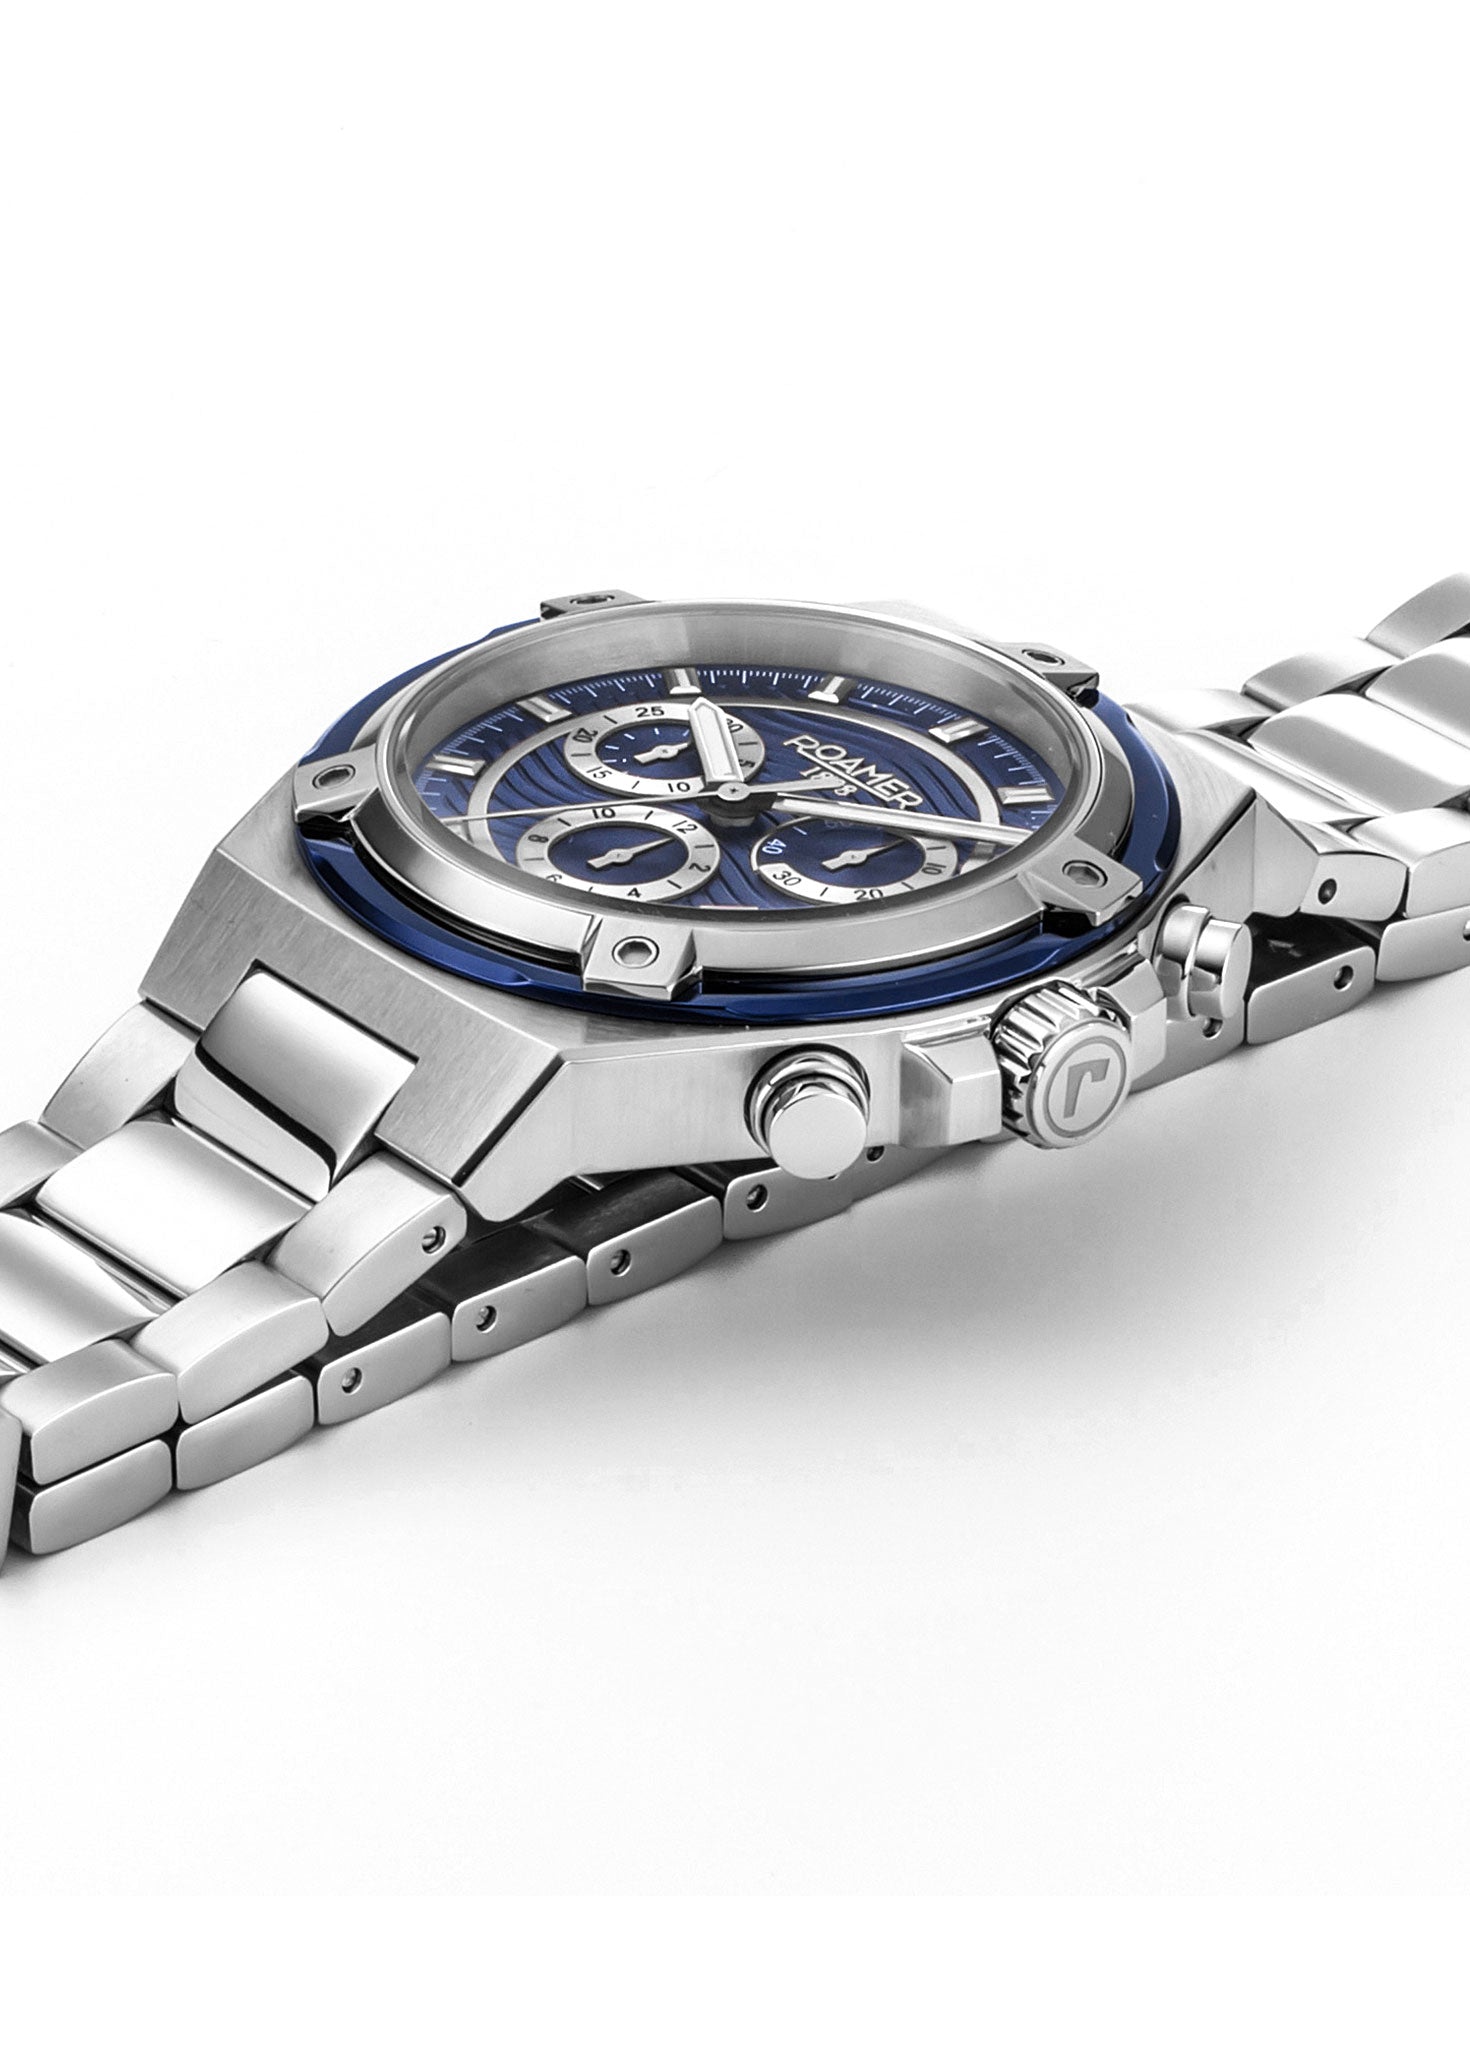 Roamer of Switzerland | Swiss Made watches since 1888